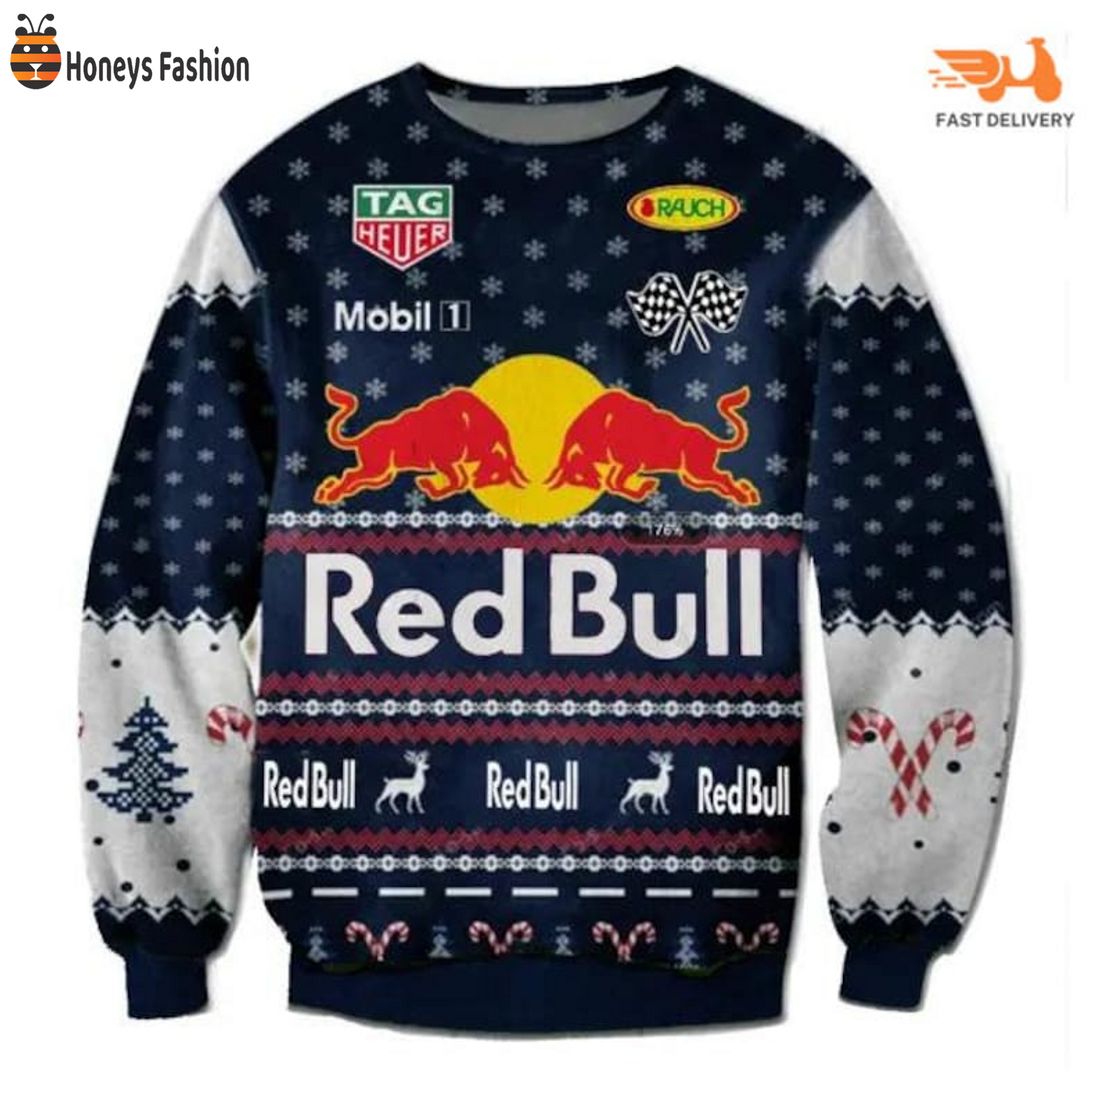 HOT Red Bull FI Racing Ugly Christmas Sweater